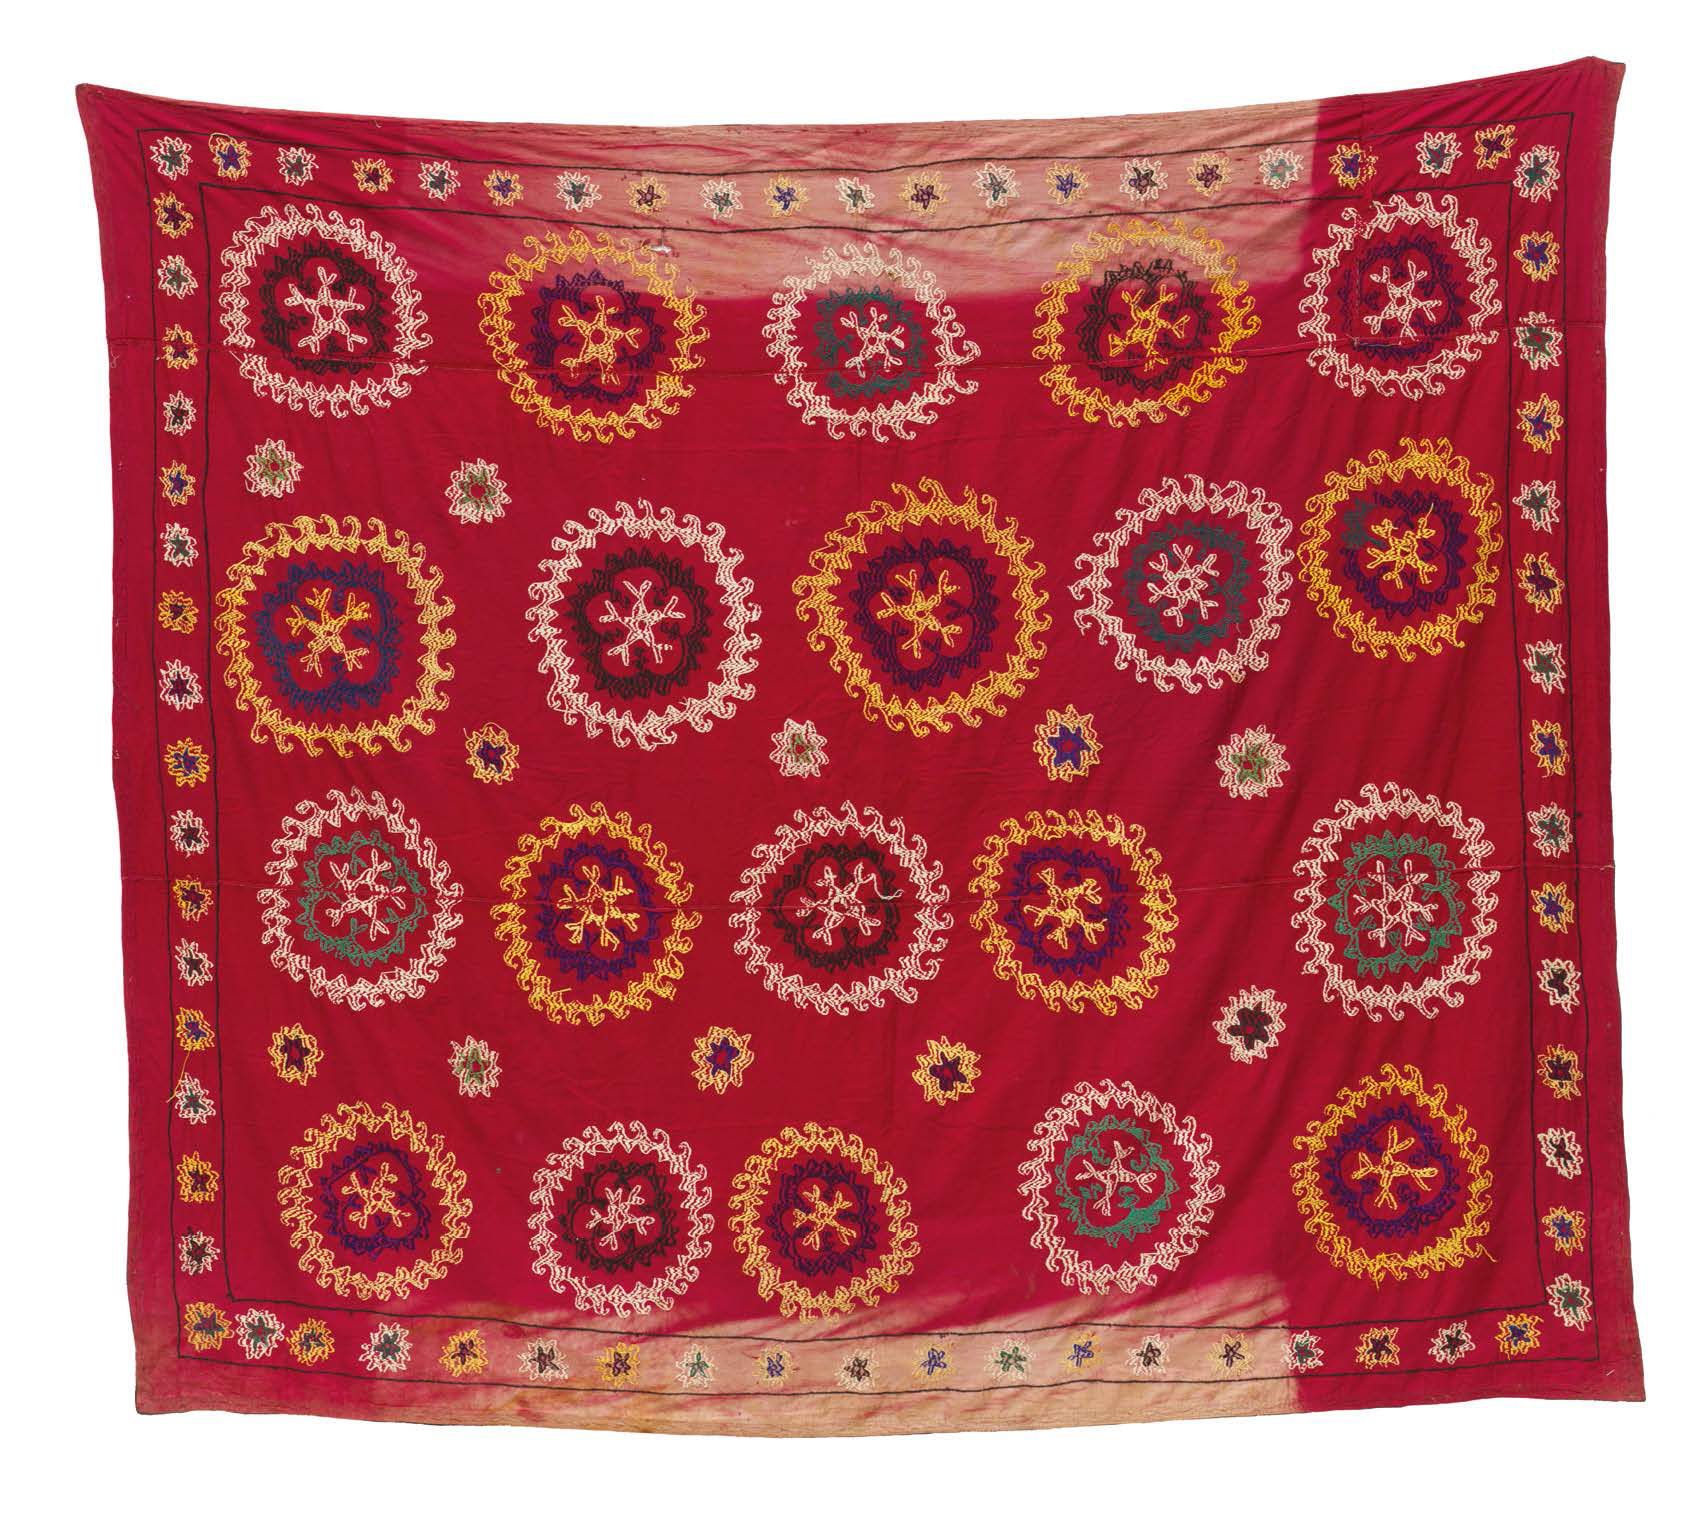 Null 两件用多色丝线绣的 "SUZANI "帐篷，一件在米色背景上，另一件在红色背景上，装饰有大的花饰，周围有叶子和螺旋状的图案。
花卉卷轴和花朵的边界。G&hellip;